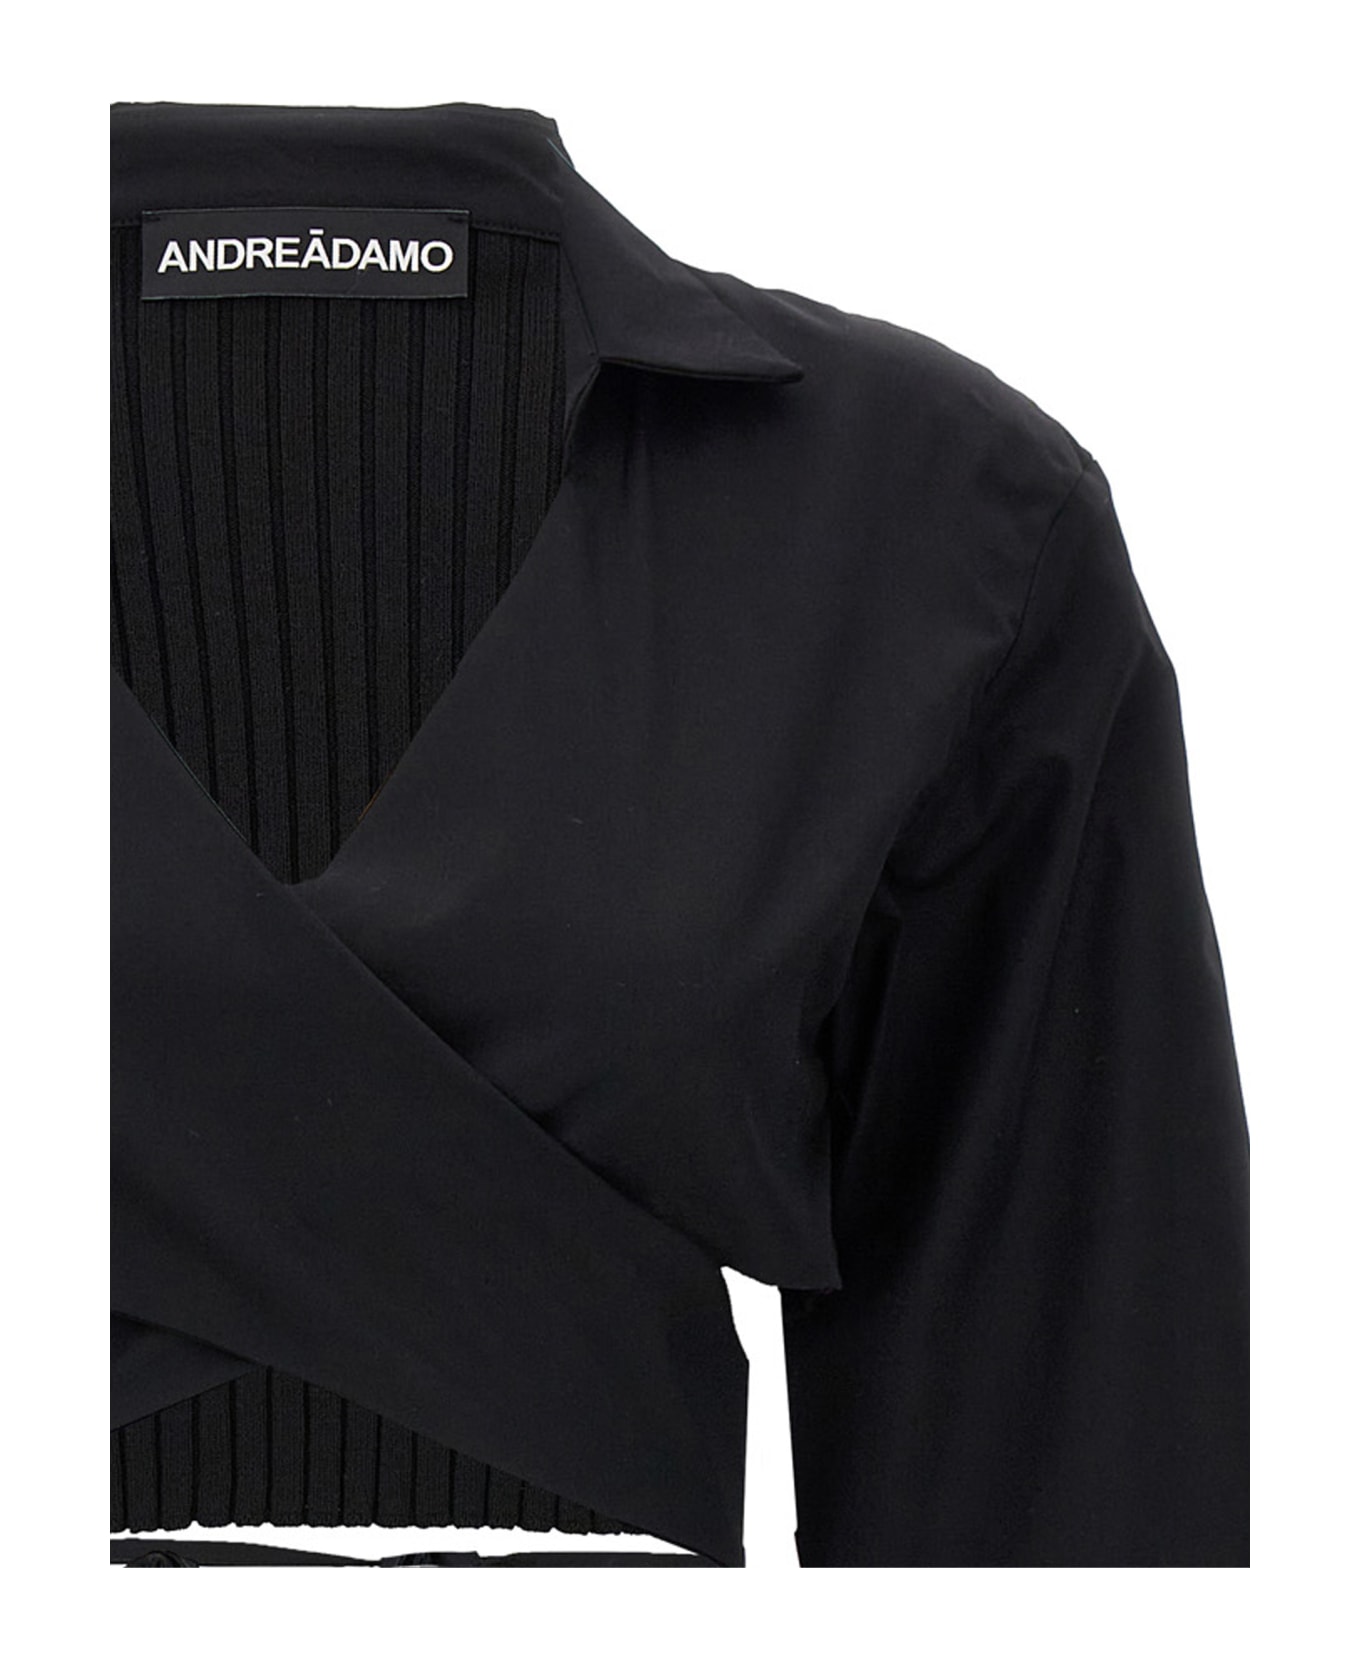 ANDREĀDAMO 'criss Cross' Cropped Shirt - Black  